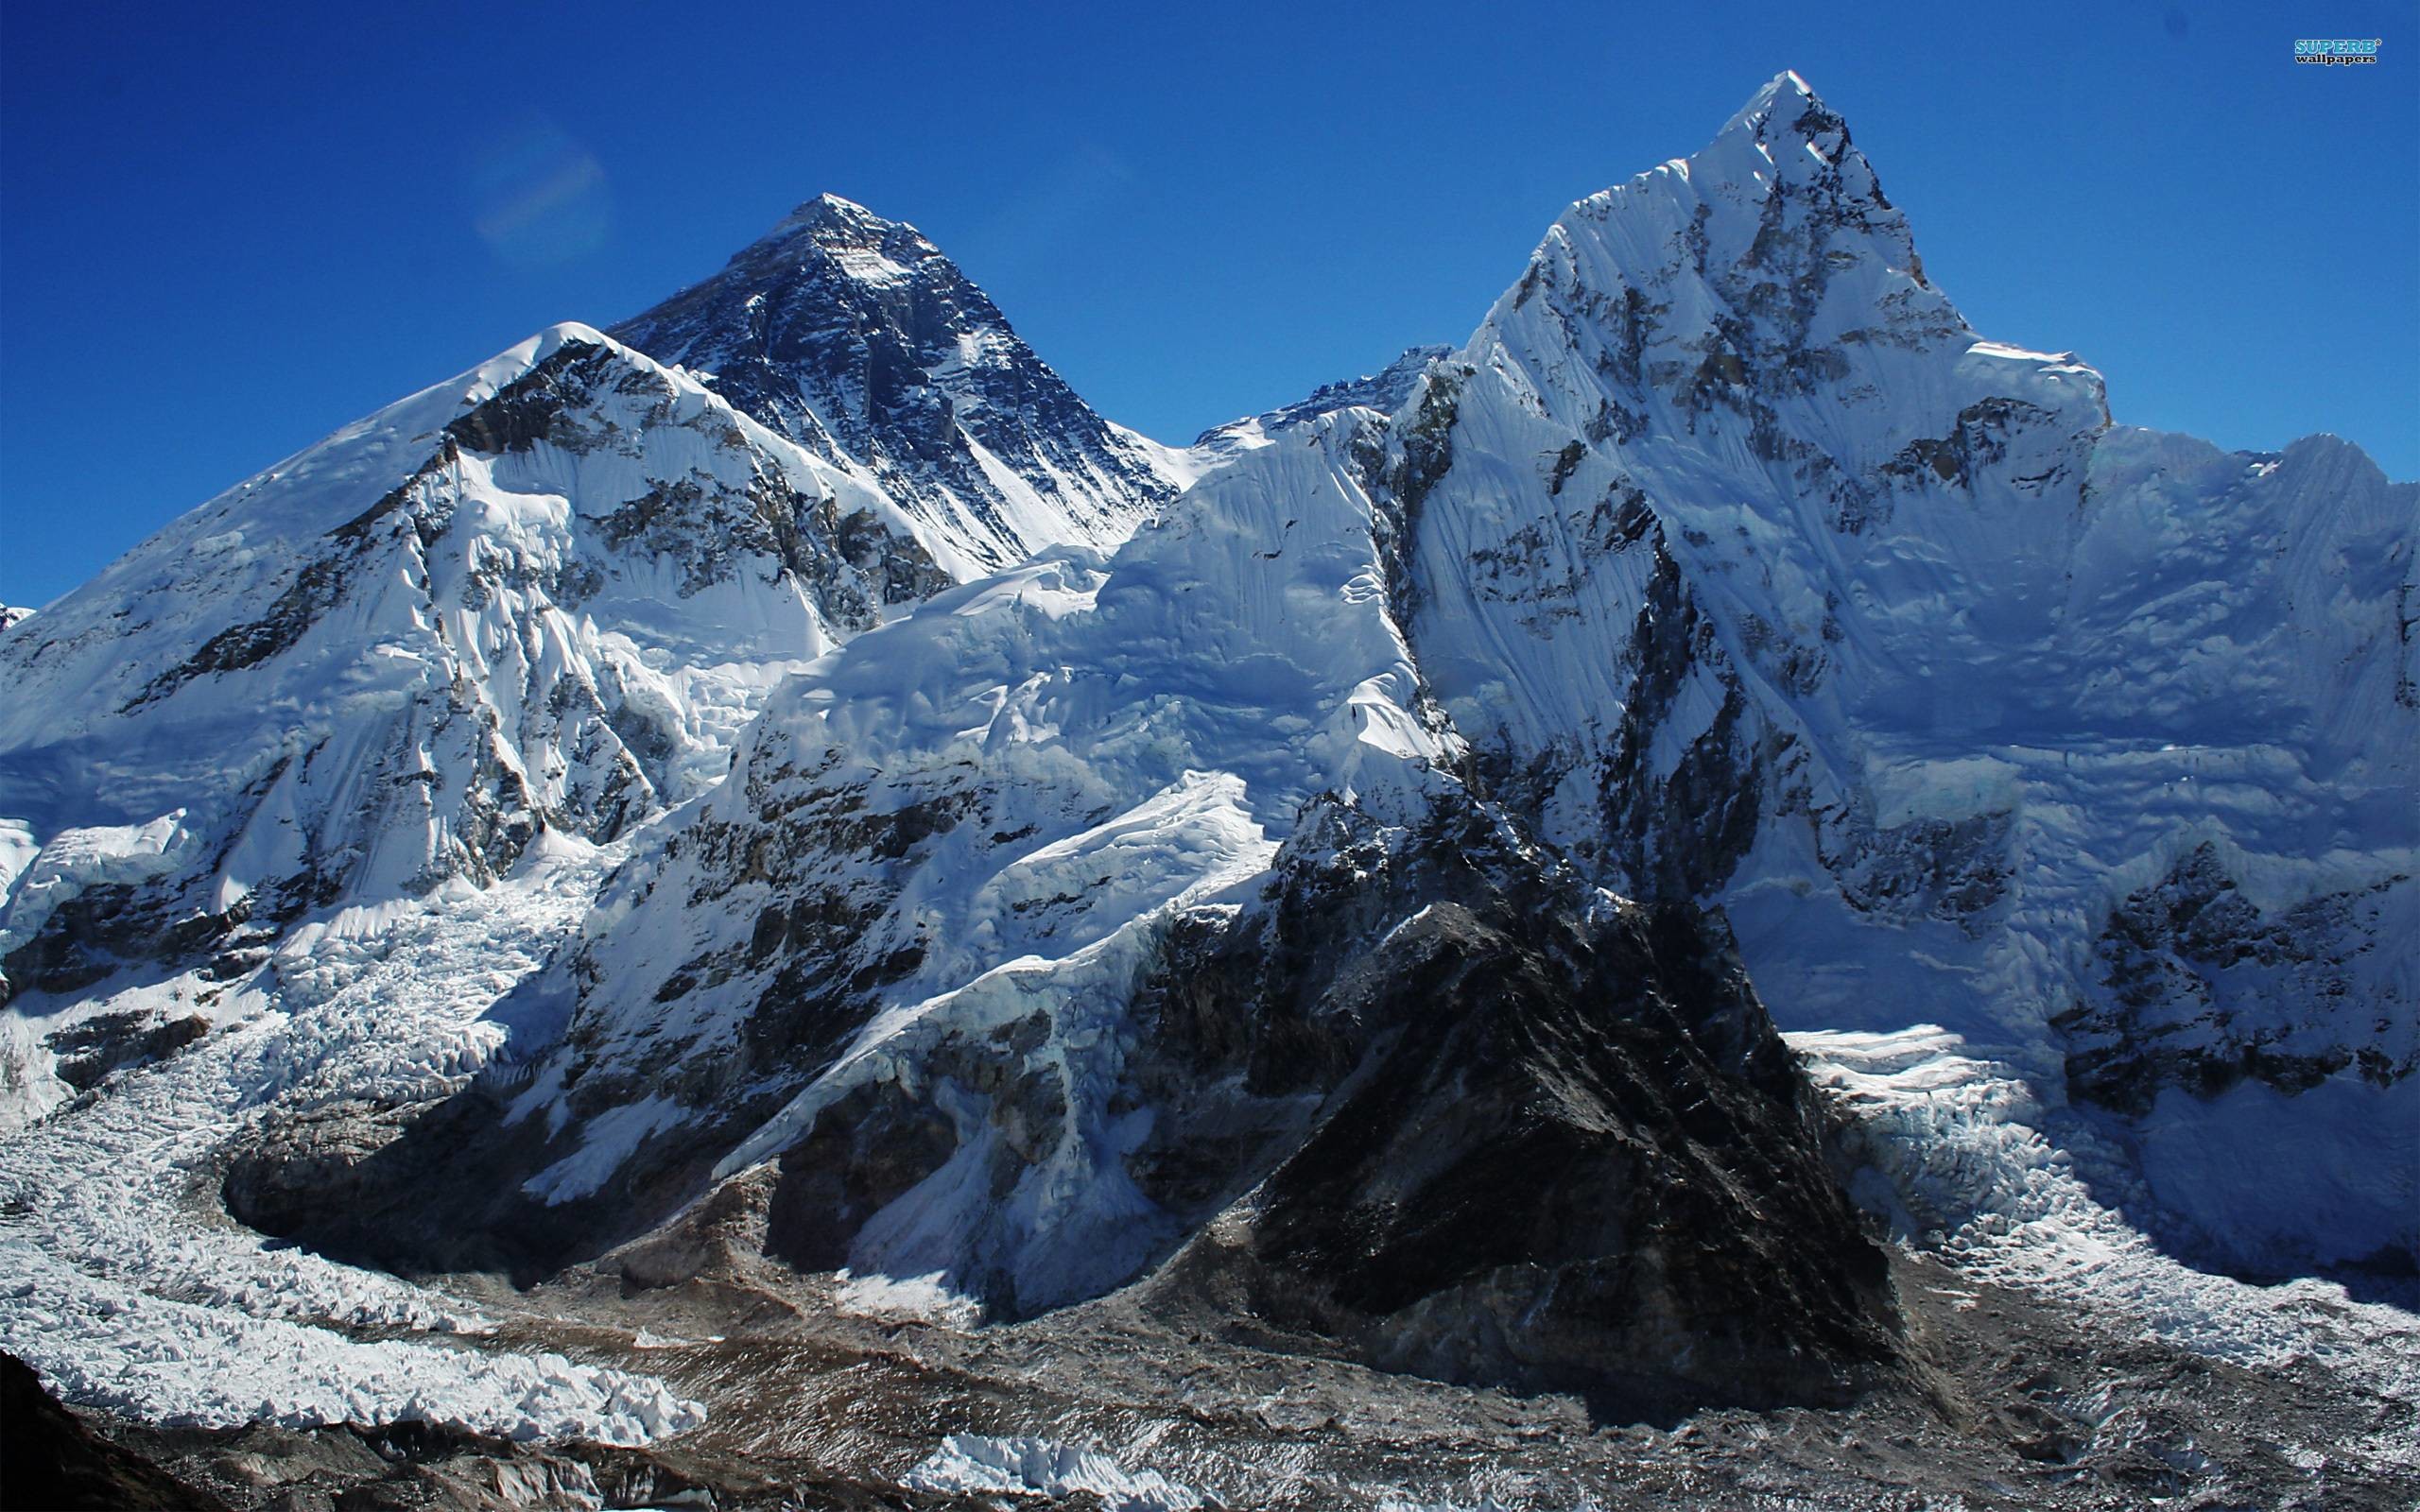 2560x1600 Mount Everest wallpaper - Nature wallpapers - #